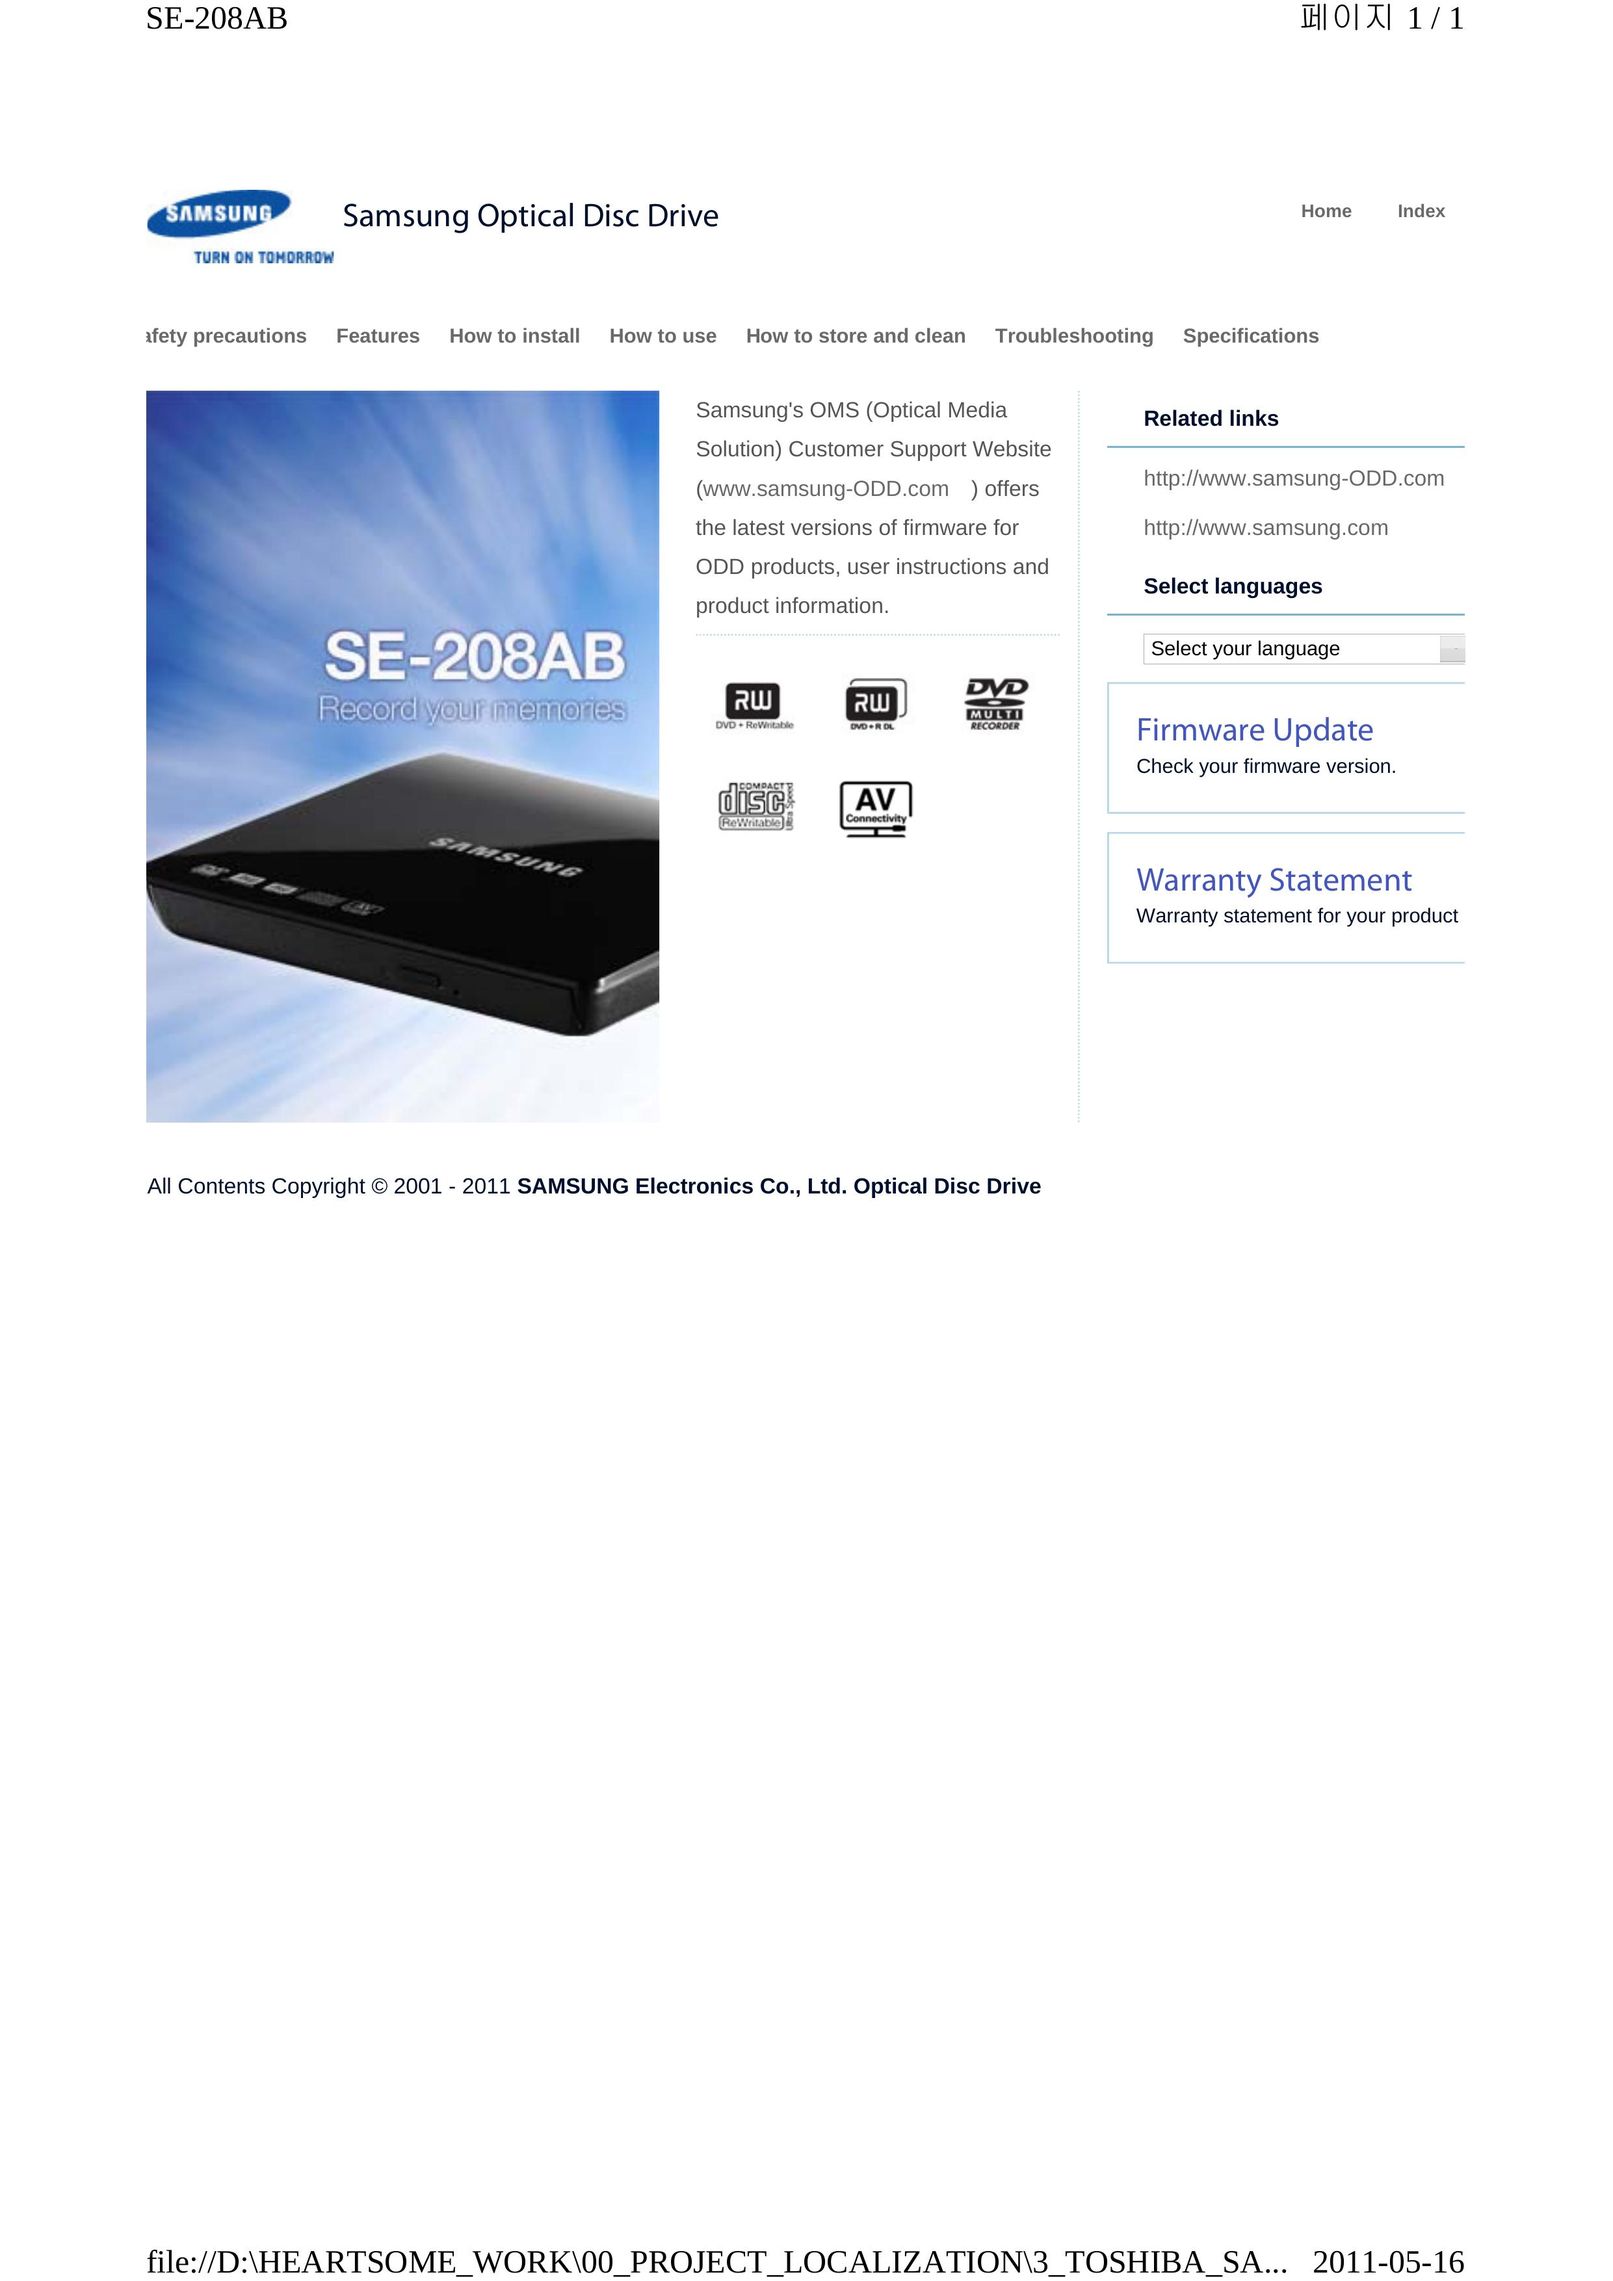 Samsung SE-208AB/TSBS DVD Recorder User Manual